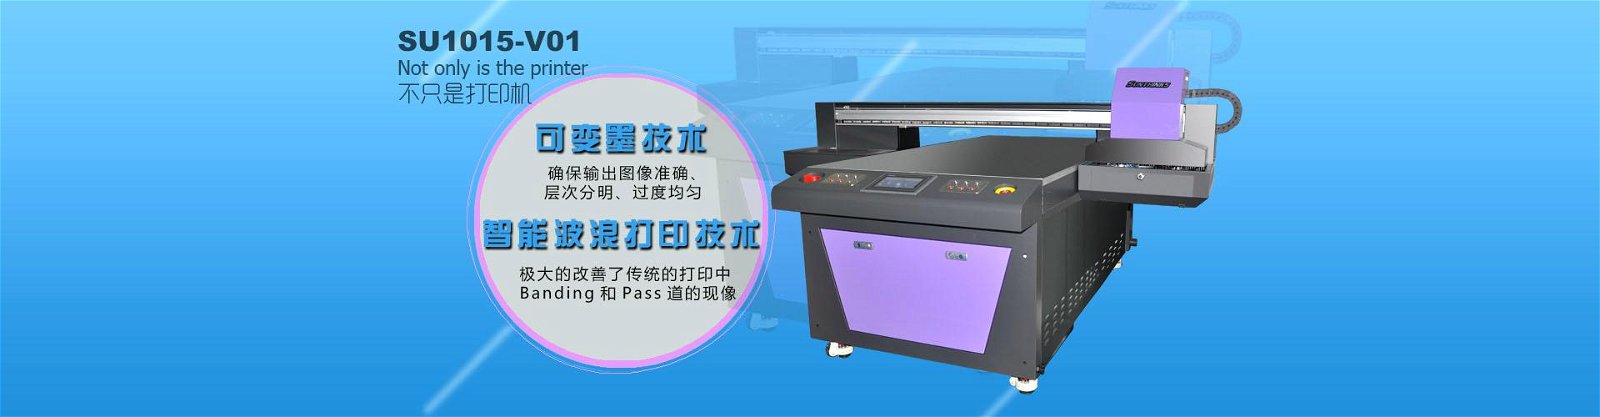 UV平板打印機SU1015-VO5 2